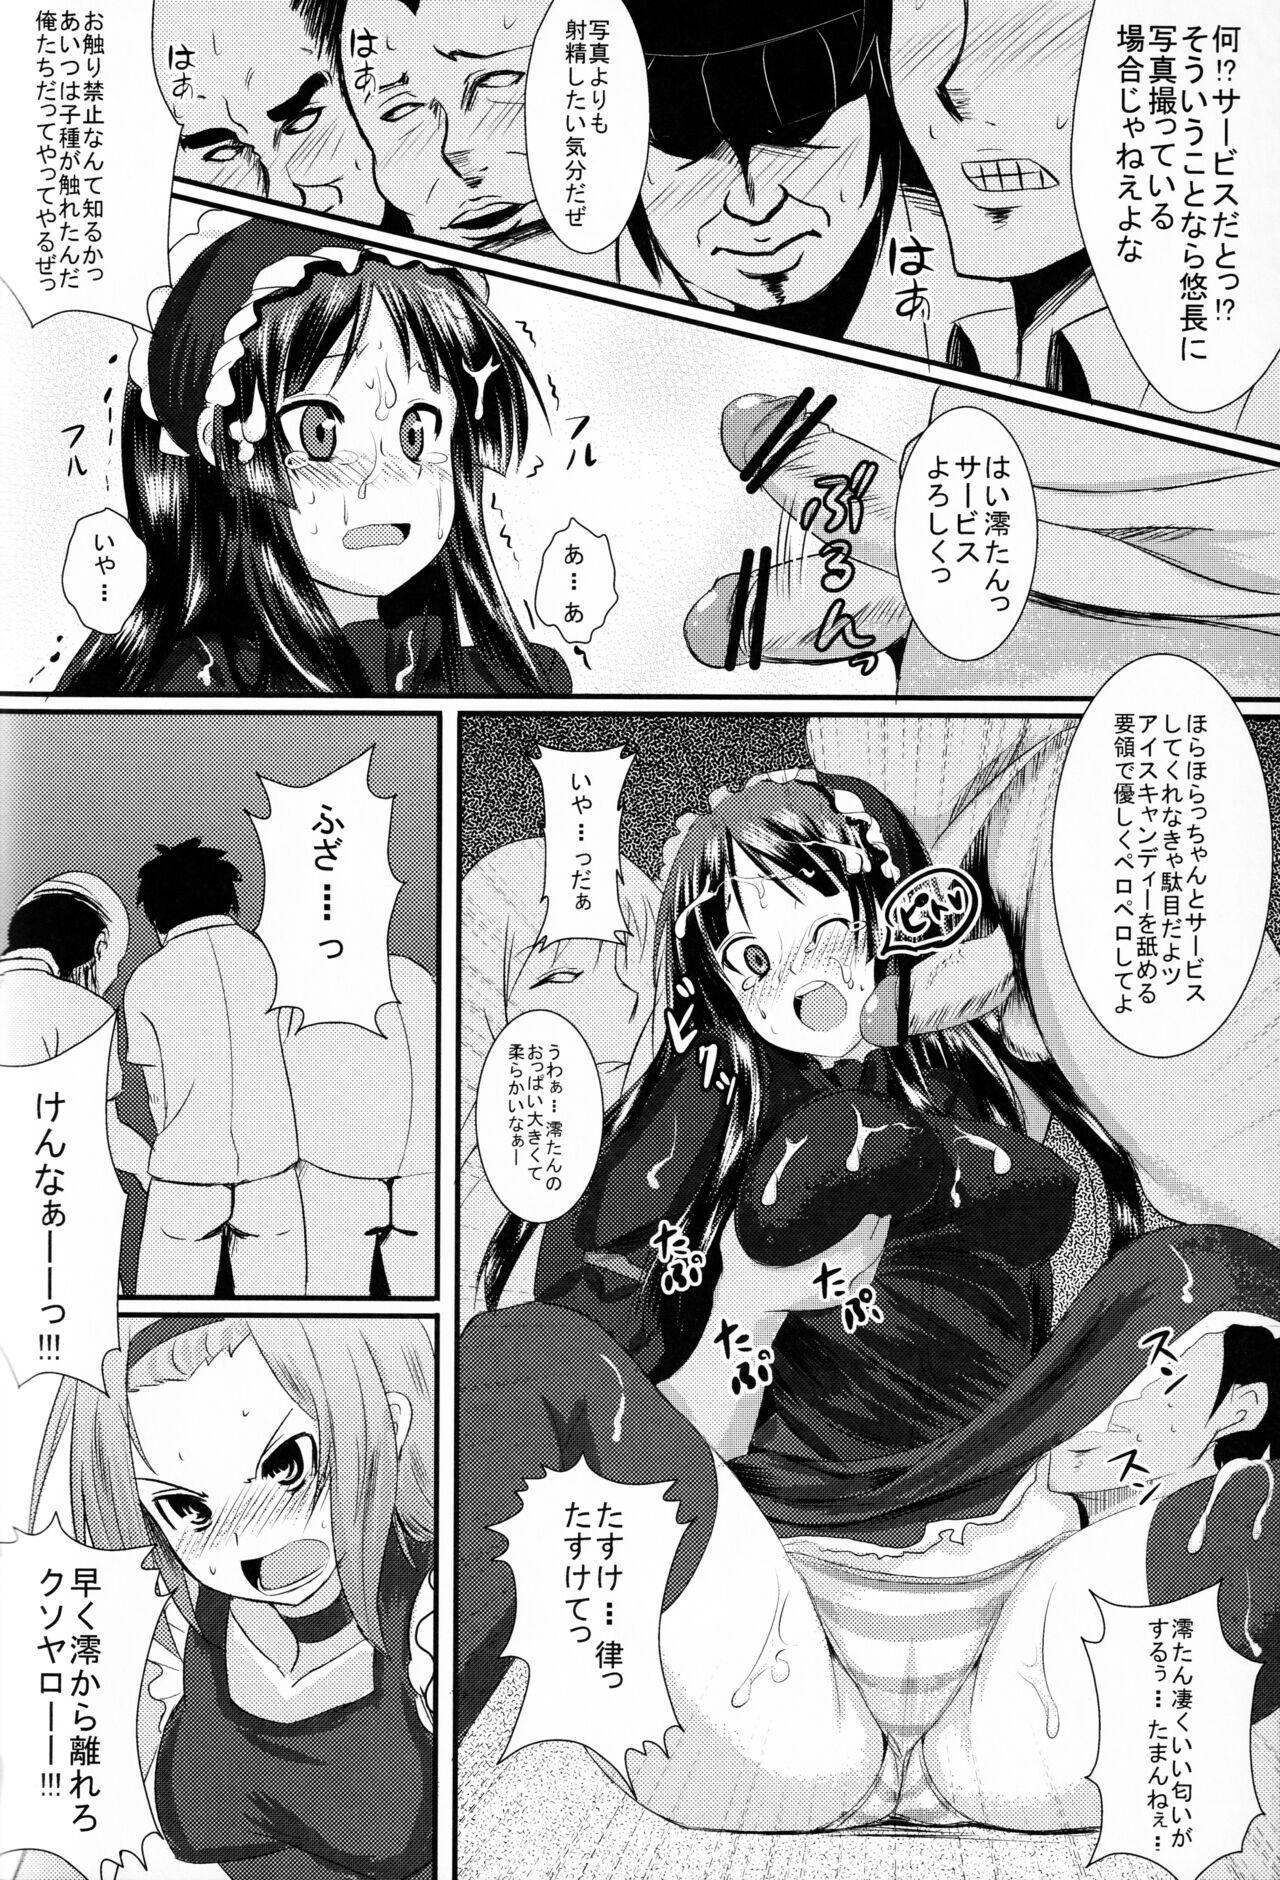 Office KKK - K on Futanari - Page 9